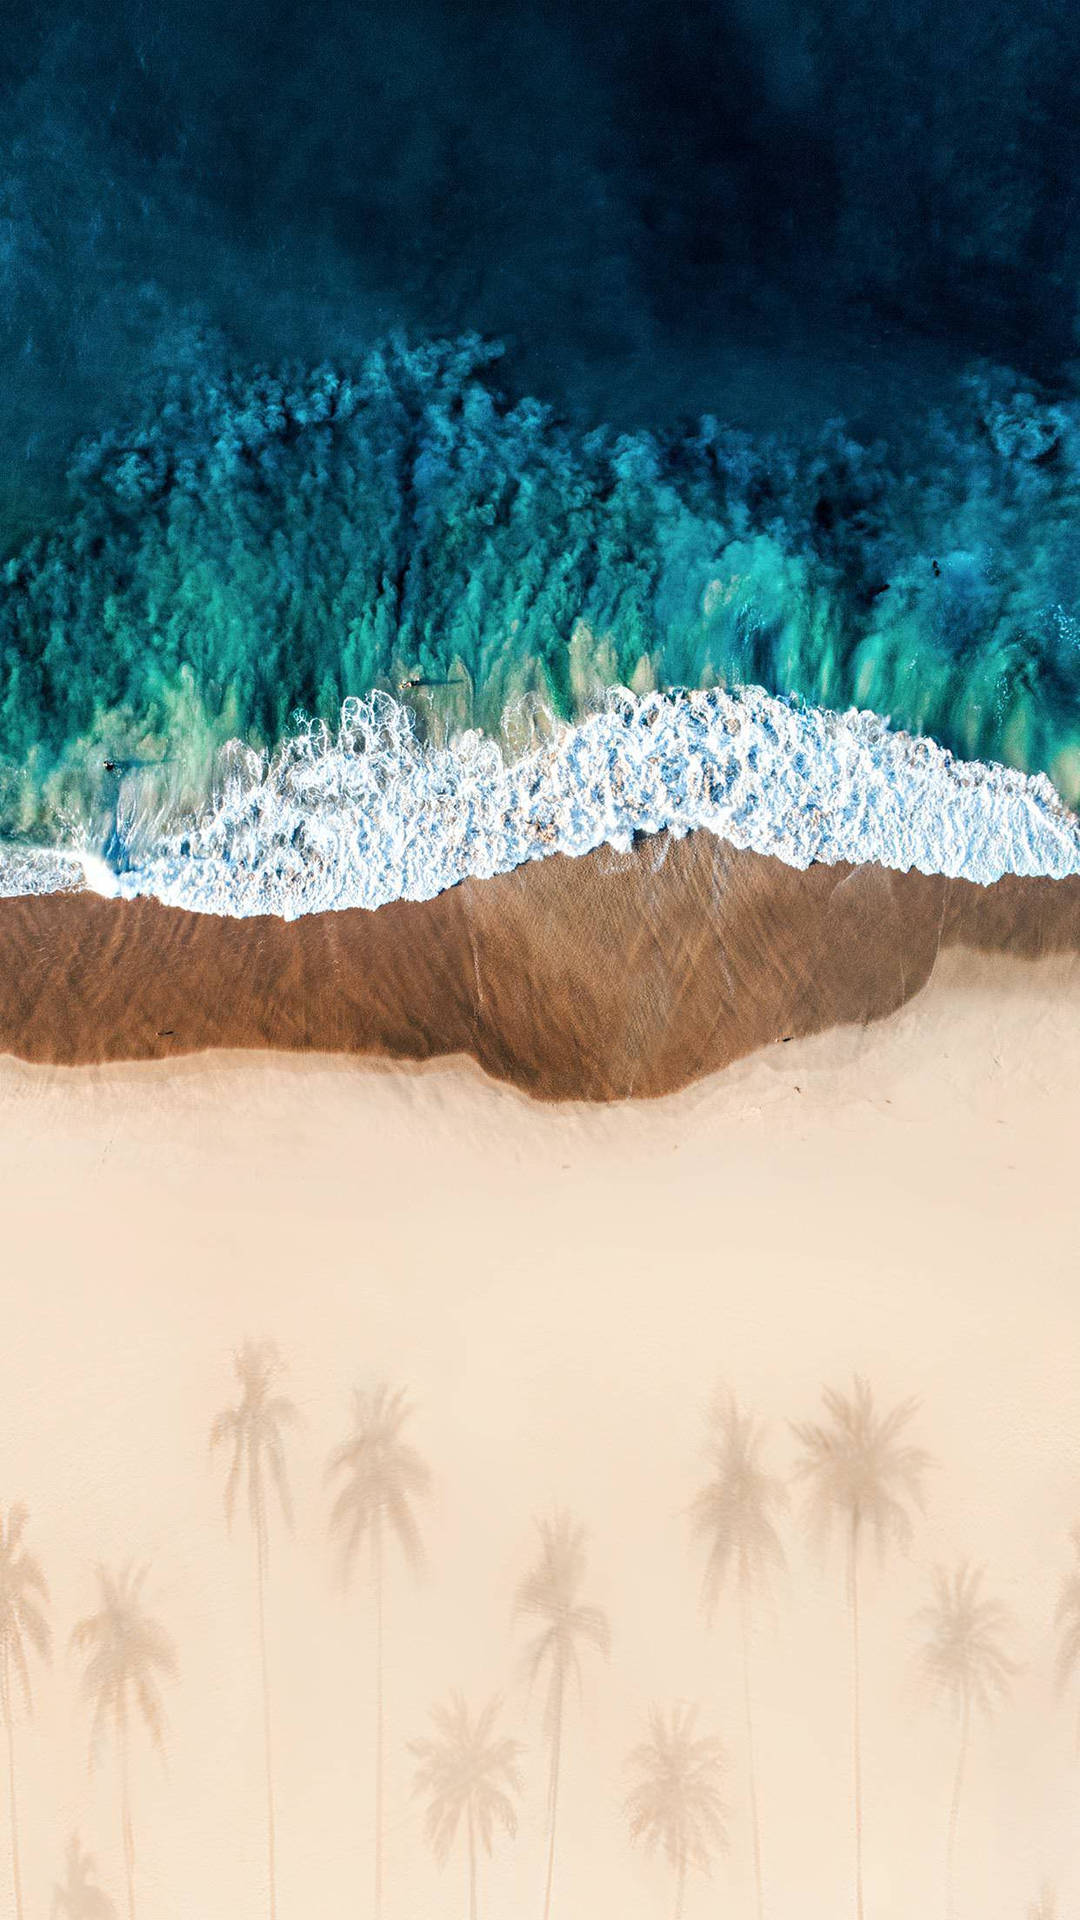 Ipad Pro Beach Shore With Tree Shadows Background